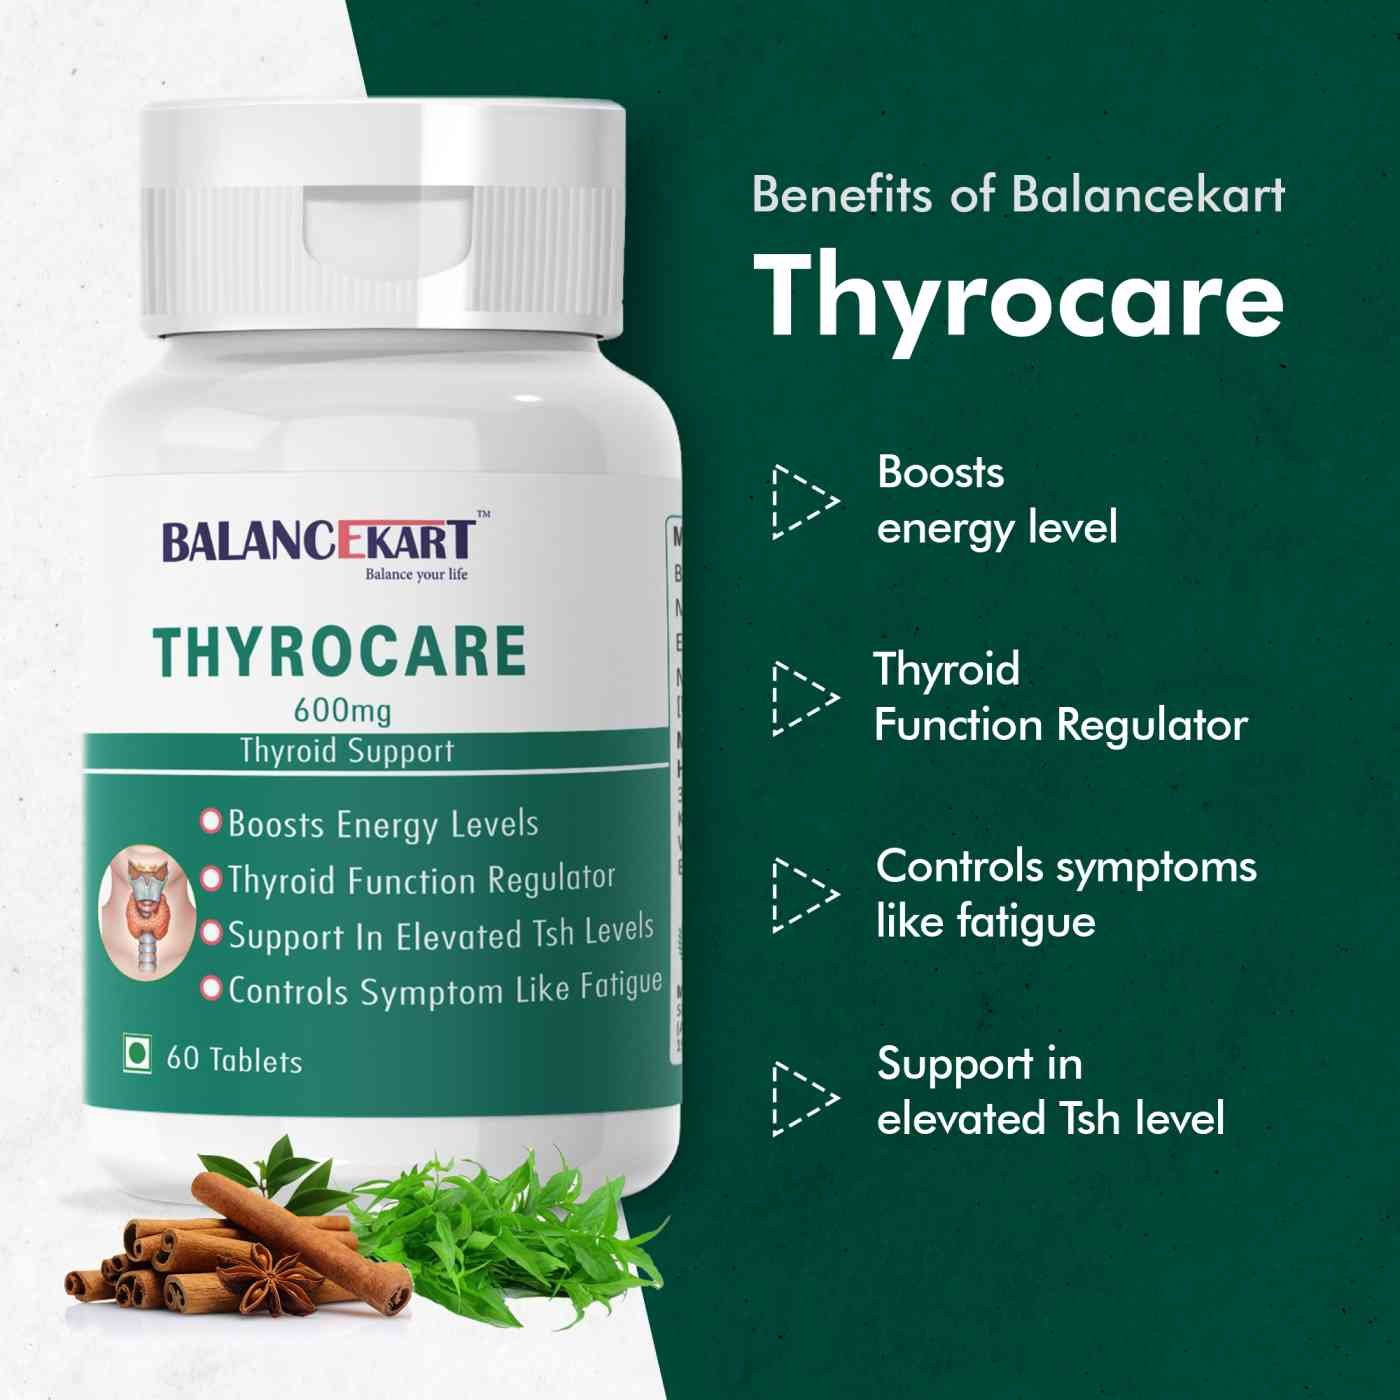 Balancekart Thyrocare - Thyroid Support Supplement 600MG Tablets, Manage Thyroid Disorders - 60 Veg. Tablets